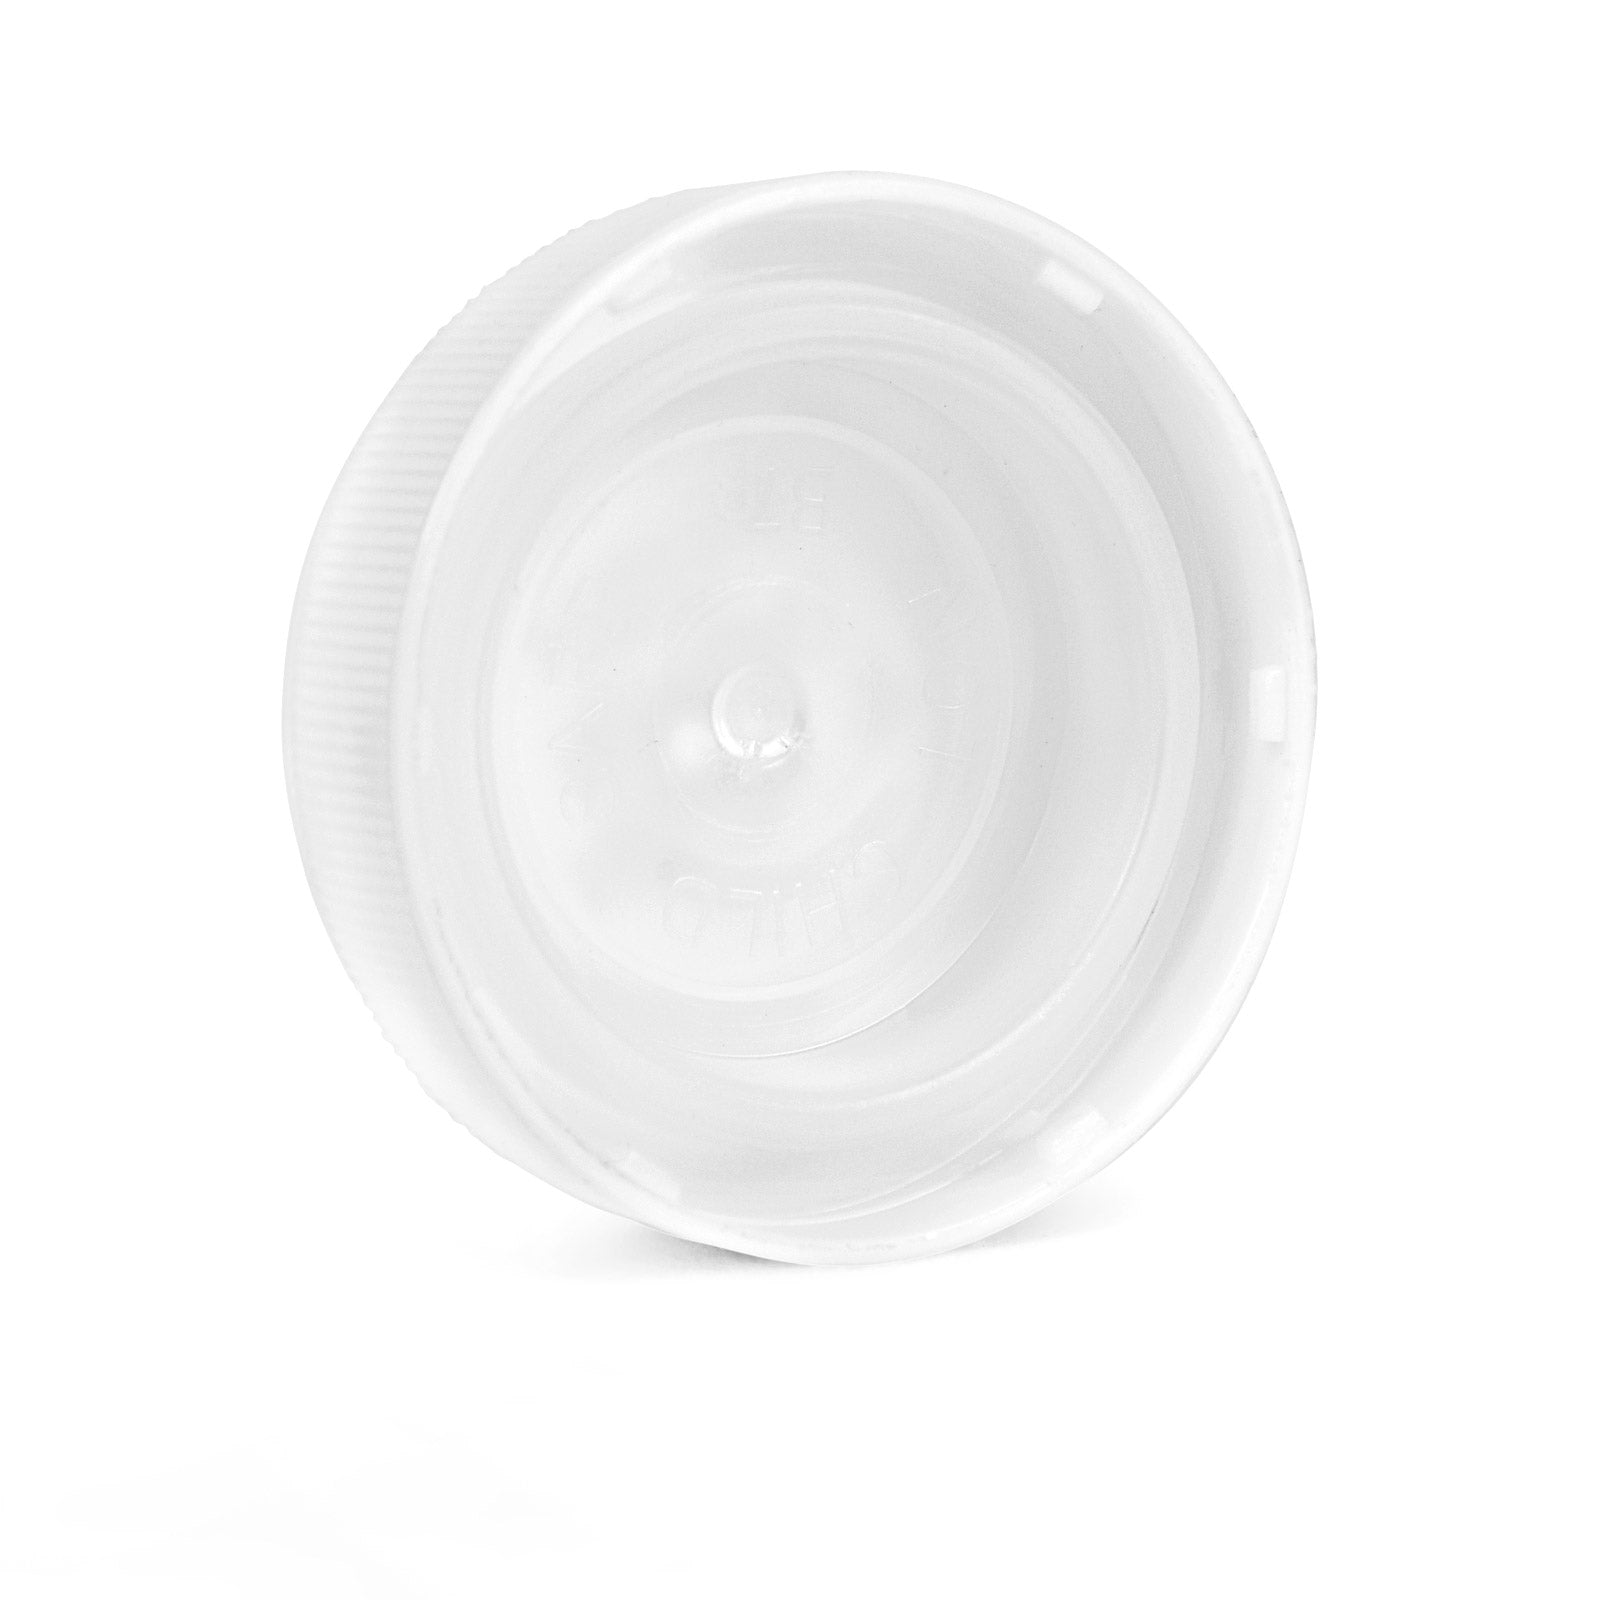 40 Dram Reversible Cap Opaque White - 1 Count